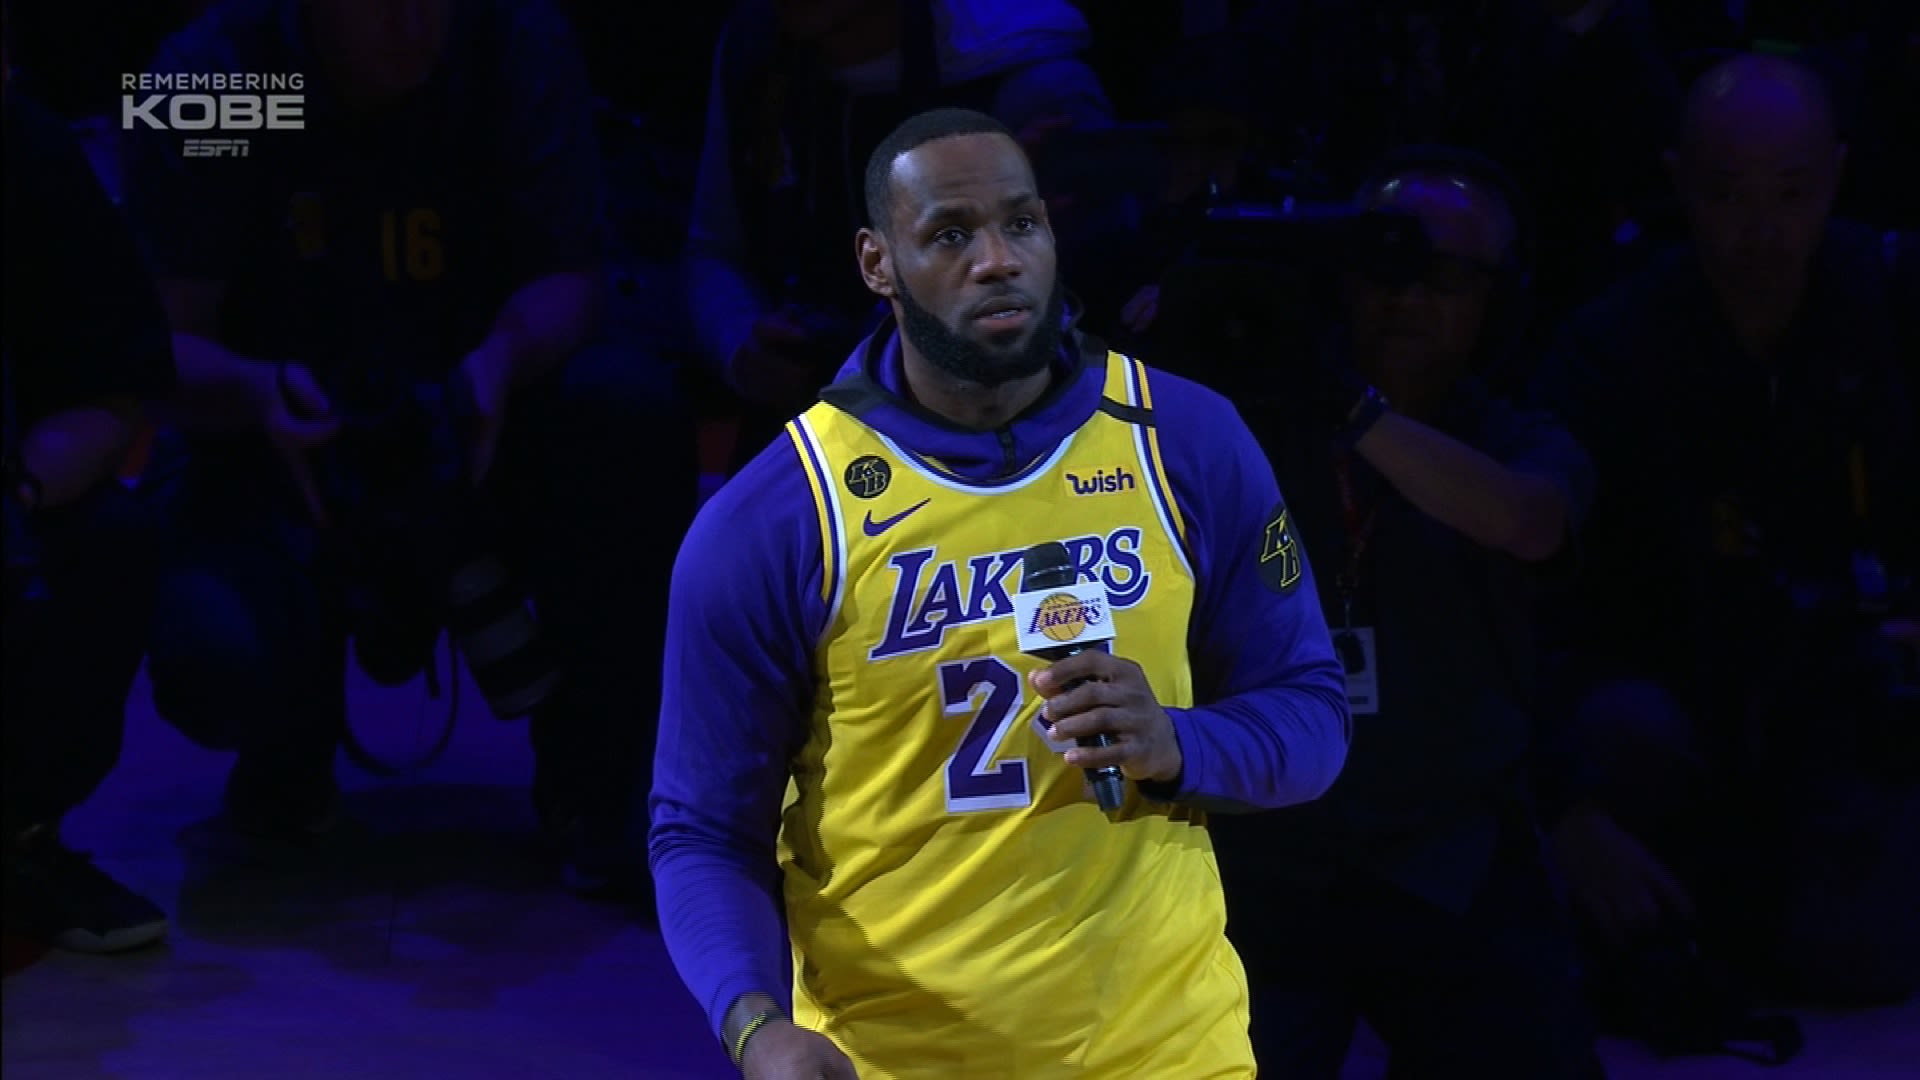 Hear LeBron James' emotional tribute to Kobe Bryant